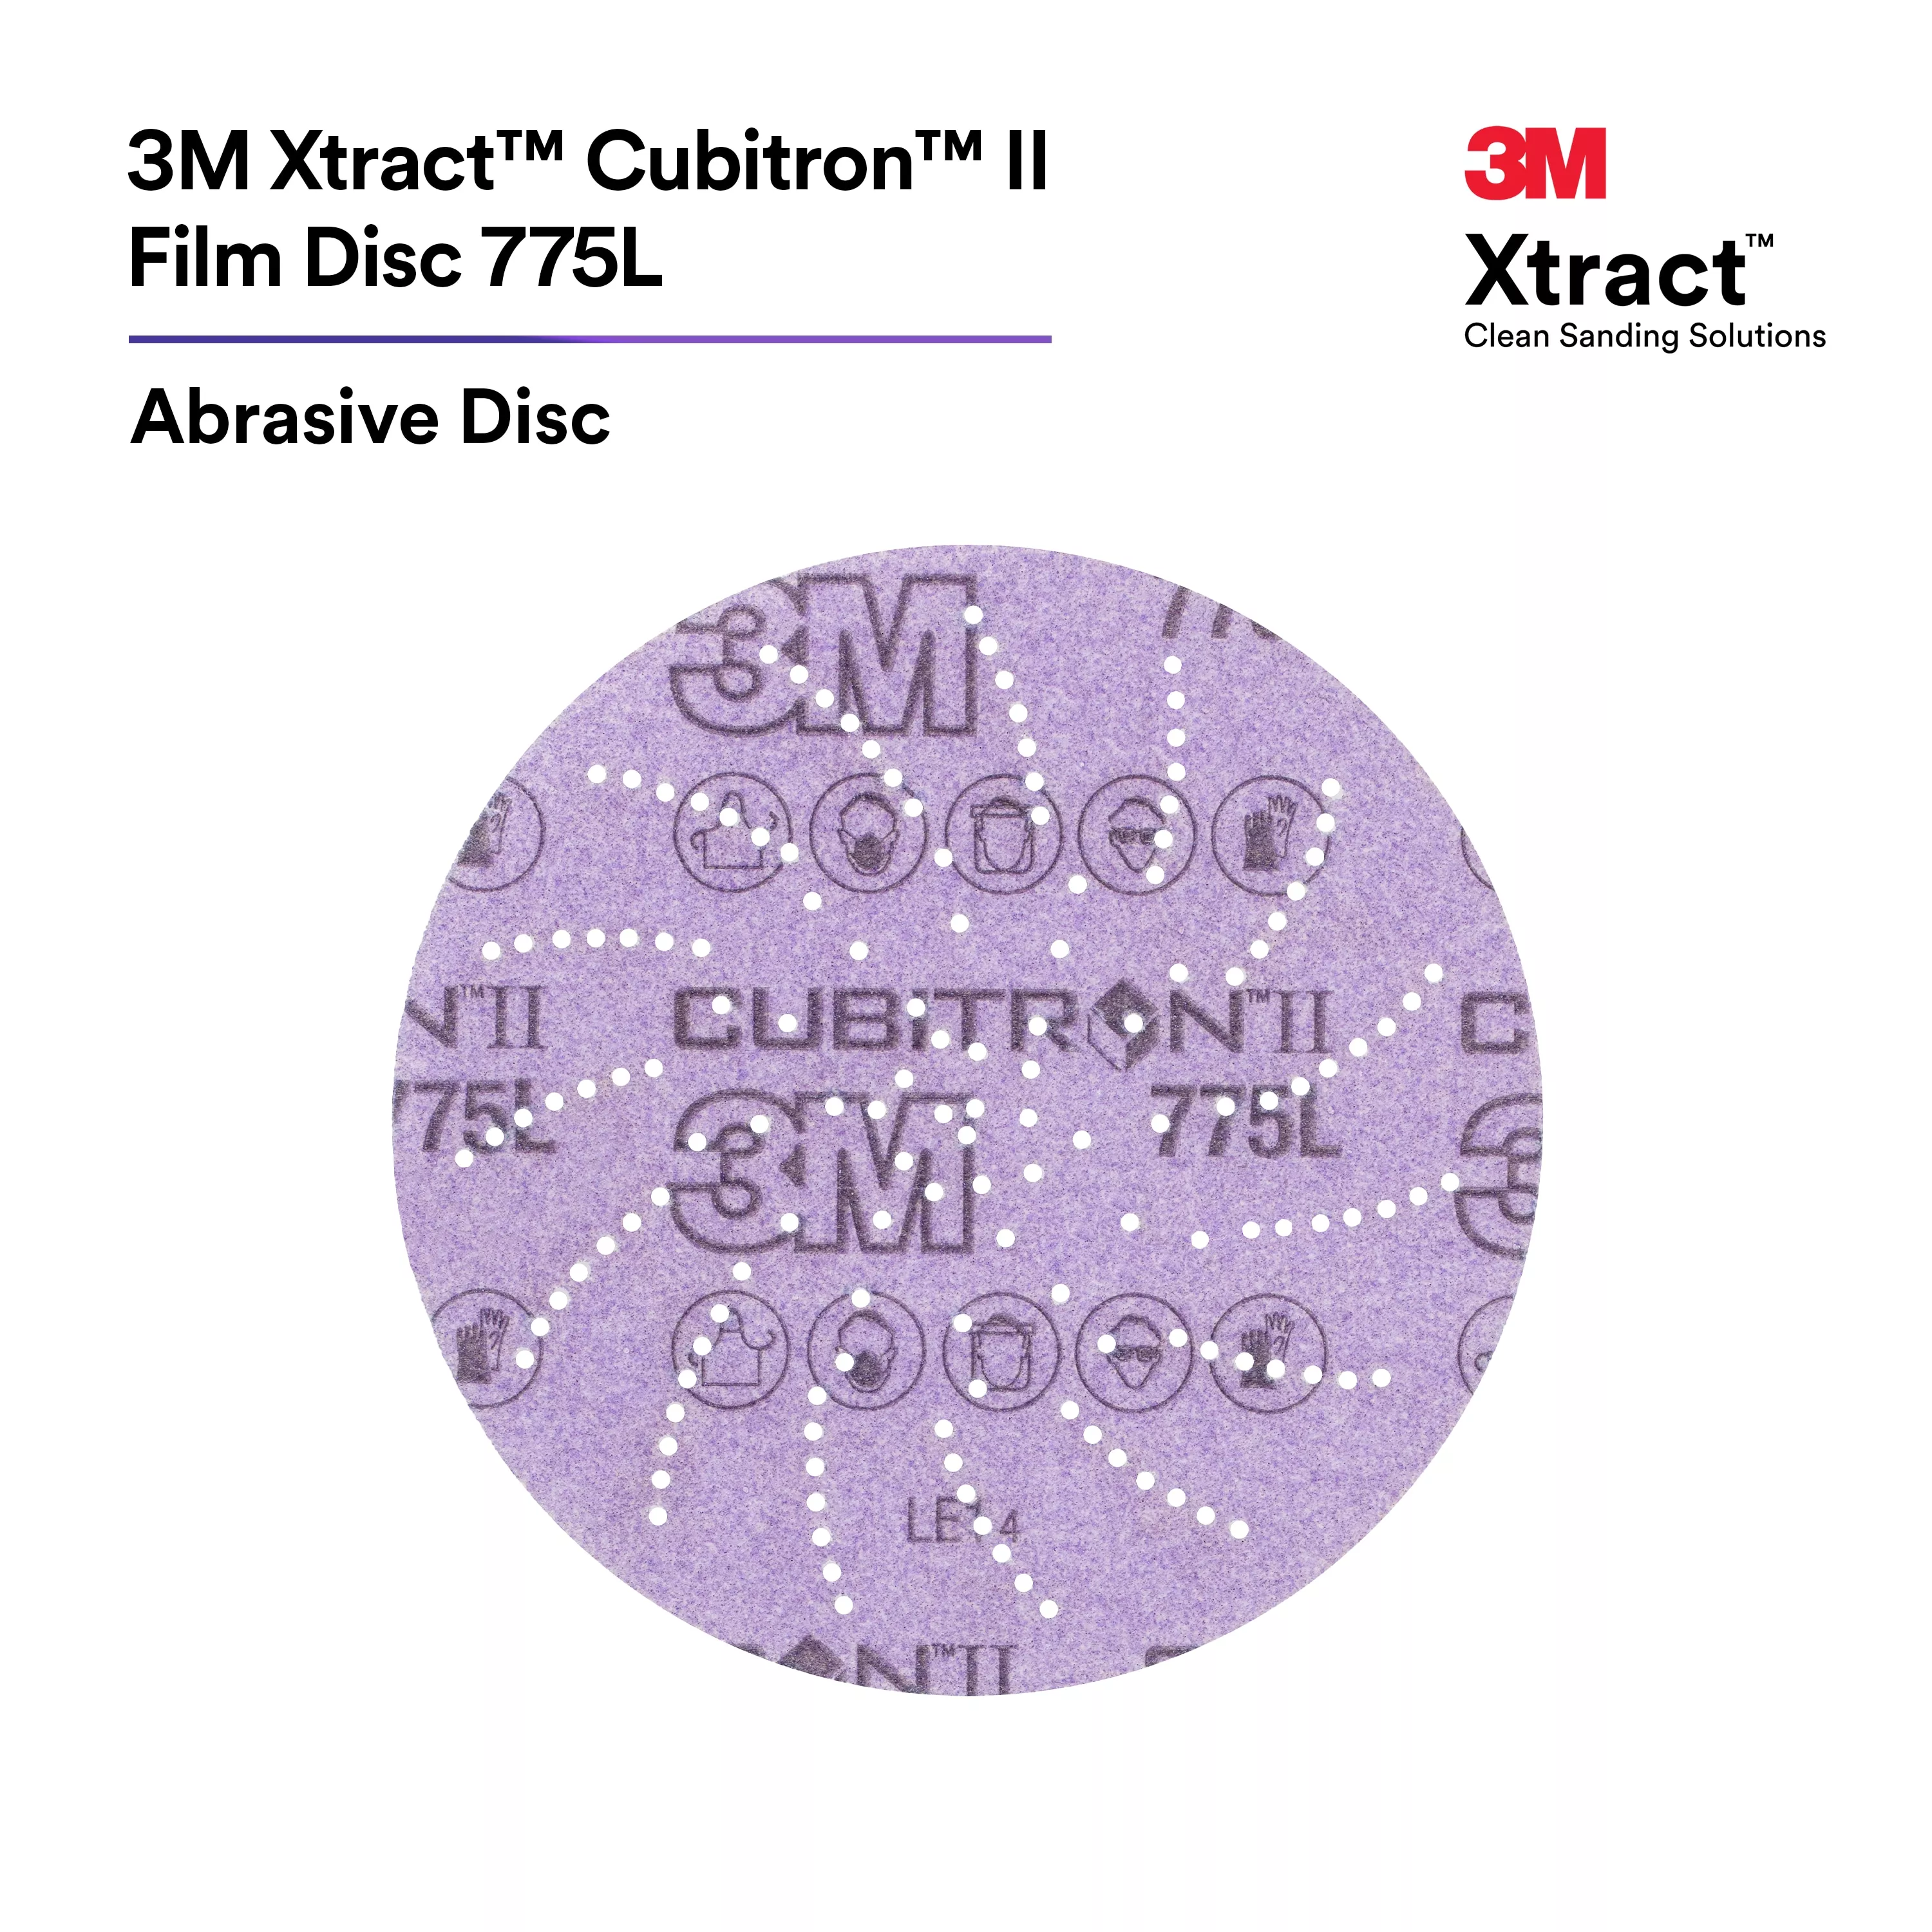 SKU 7100045071 | 3M Xtract™ Cubitron™ II Film Disc 775L